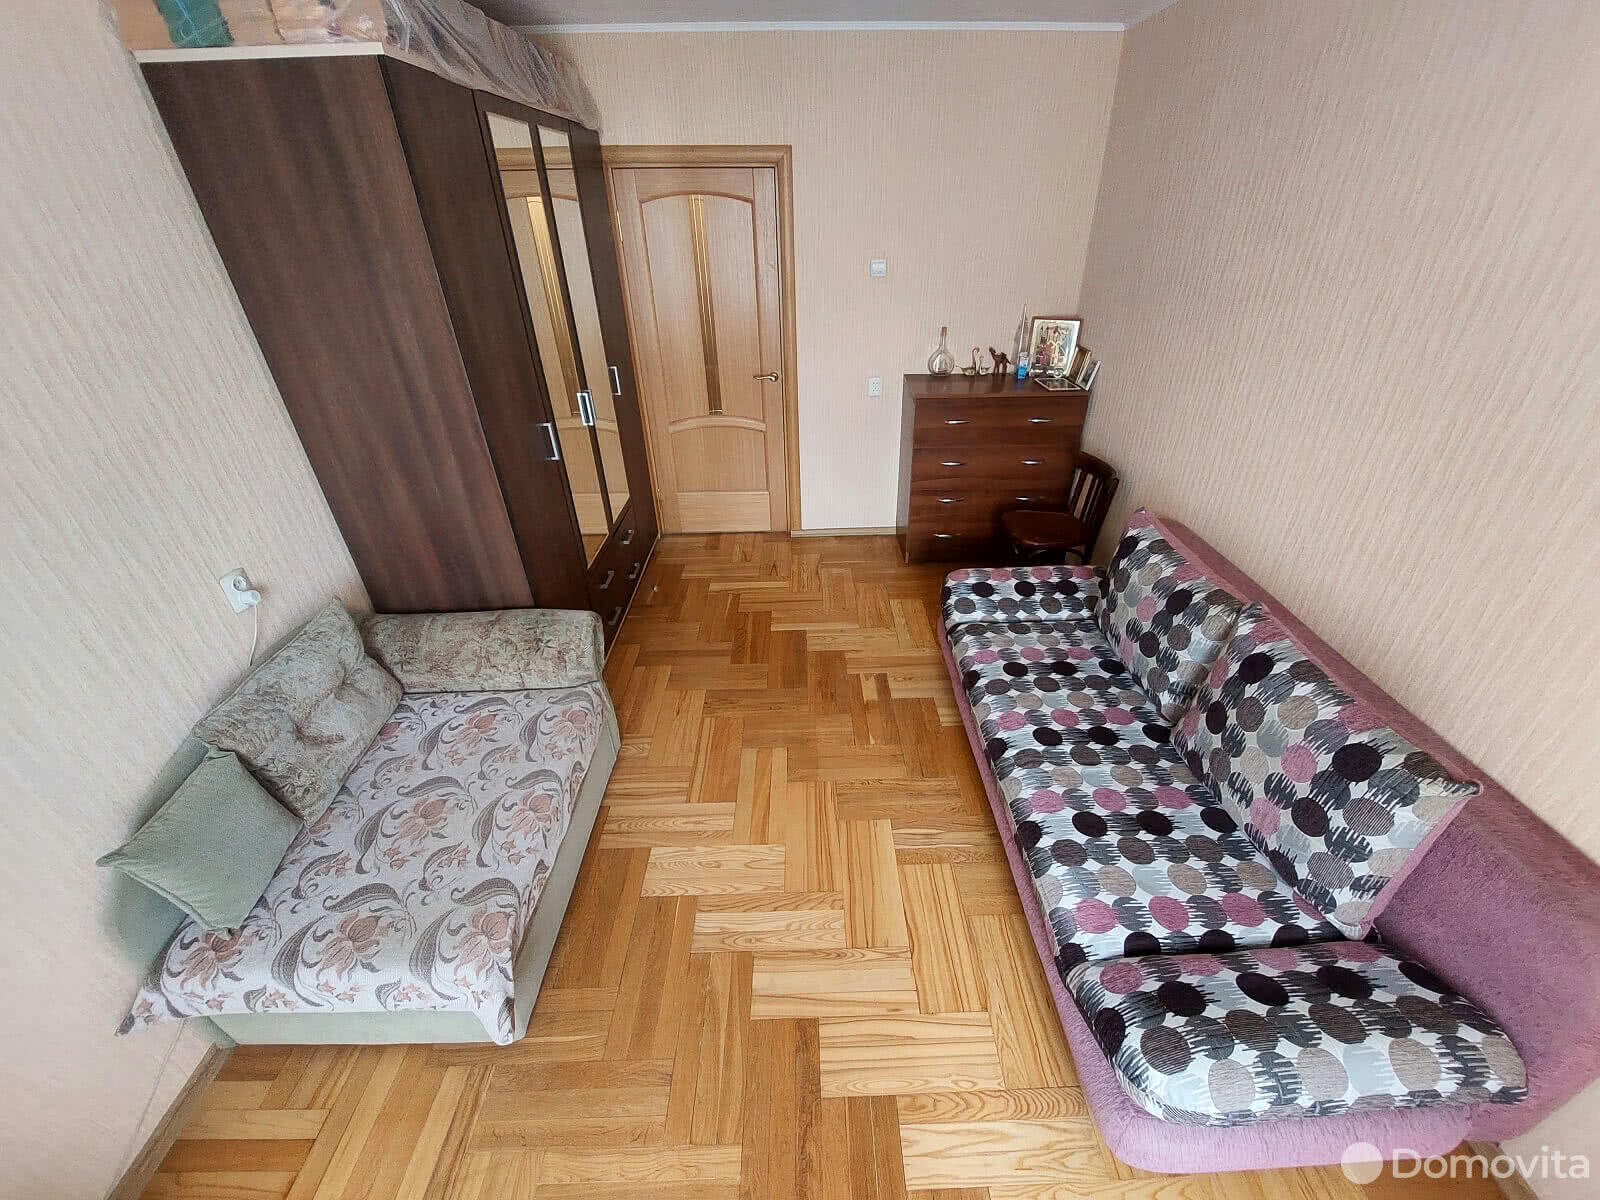 квартира, Минск, ул. Плеханова, д. 95, стоимость продажи 281 565 р.